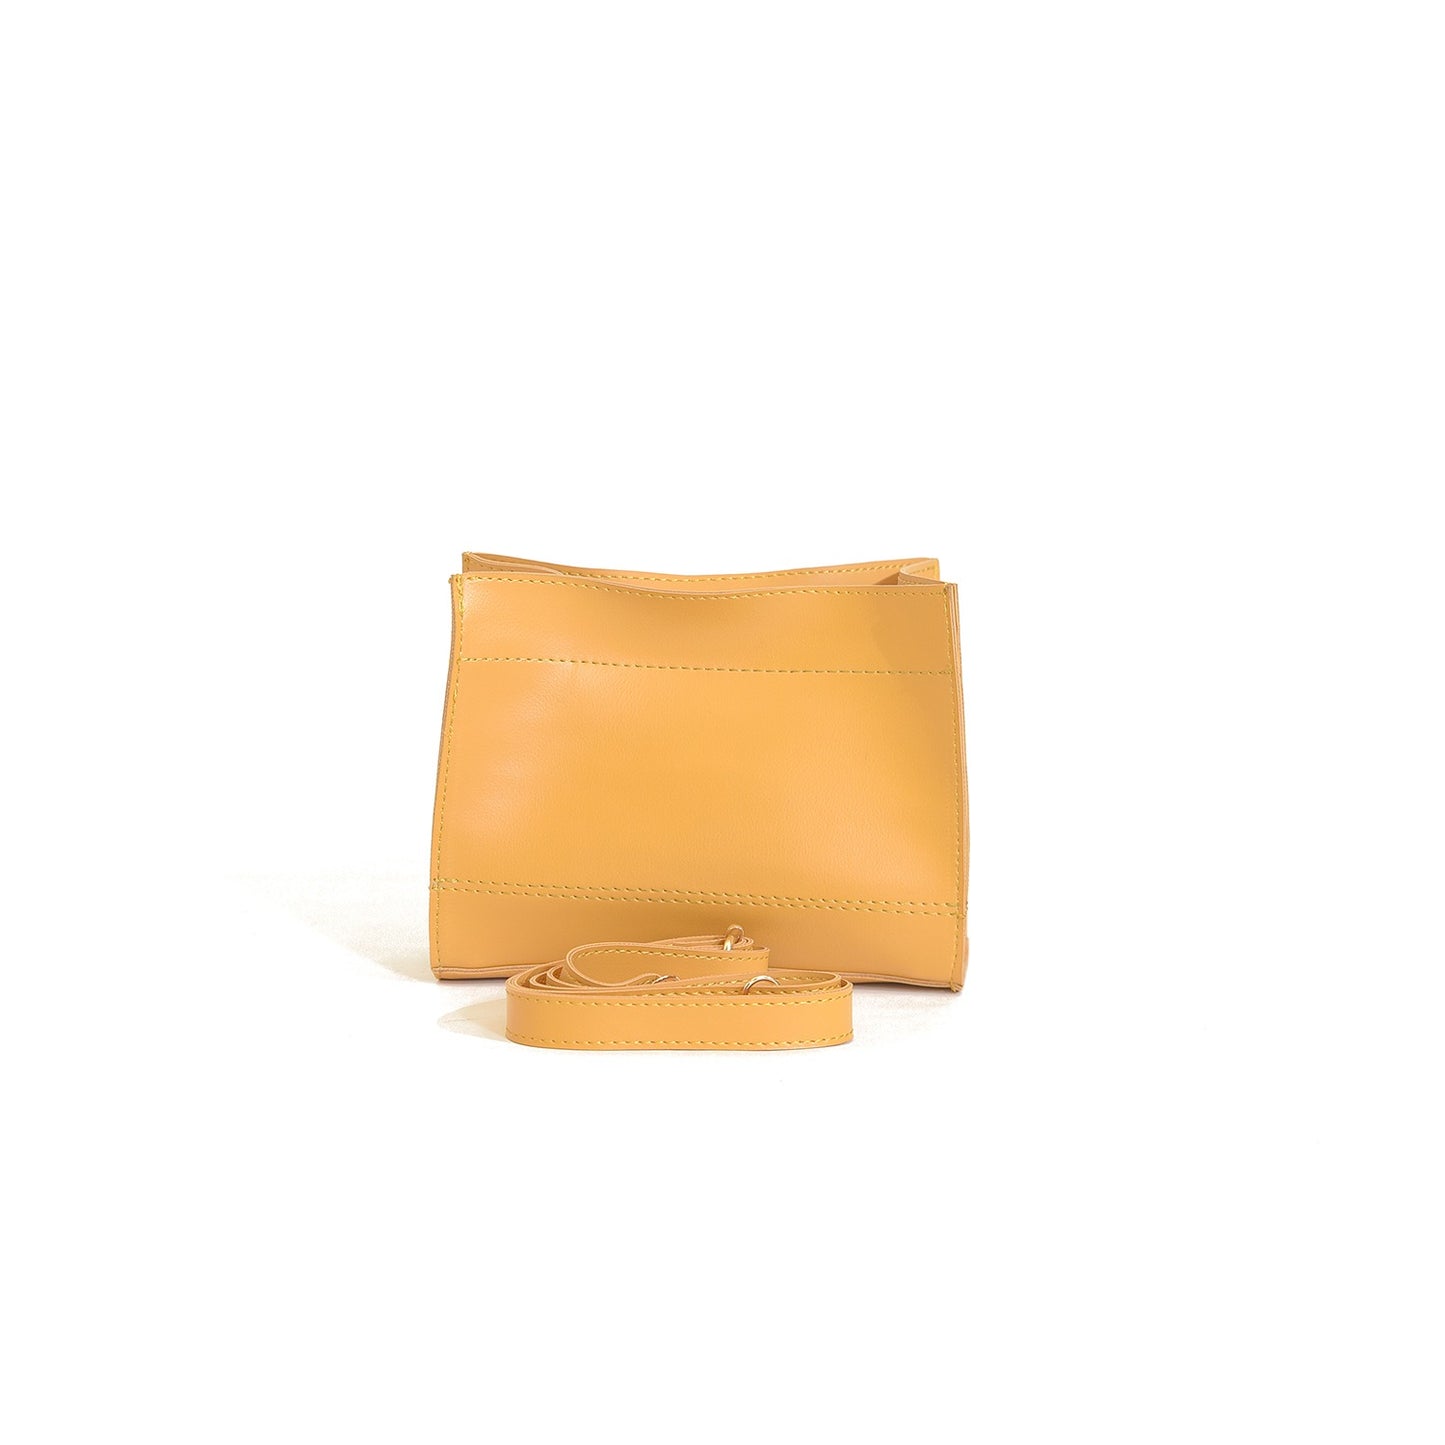 Handbag 2 piece Morocco Mustard Yellow